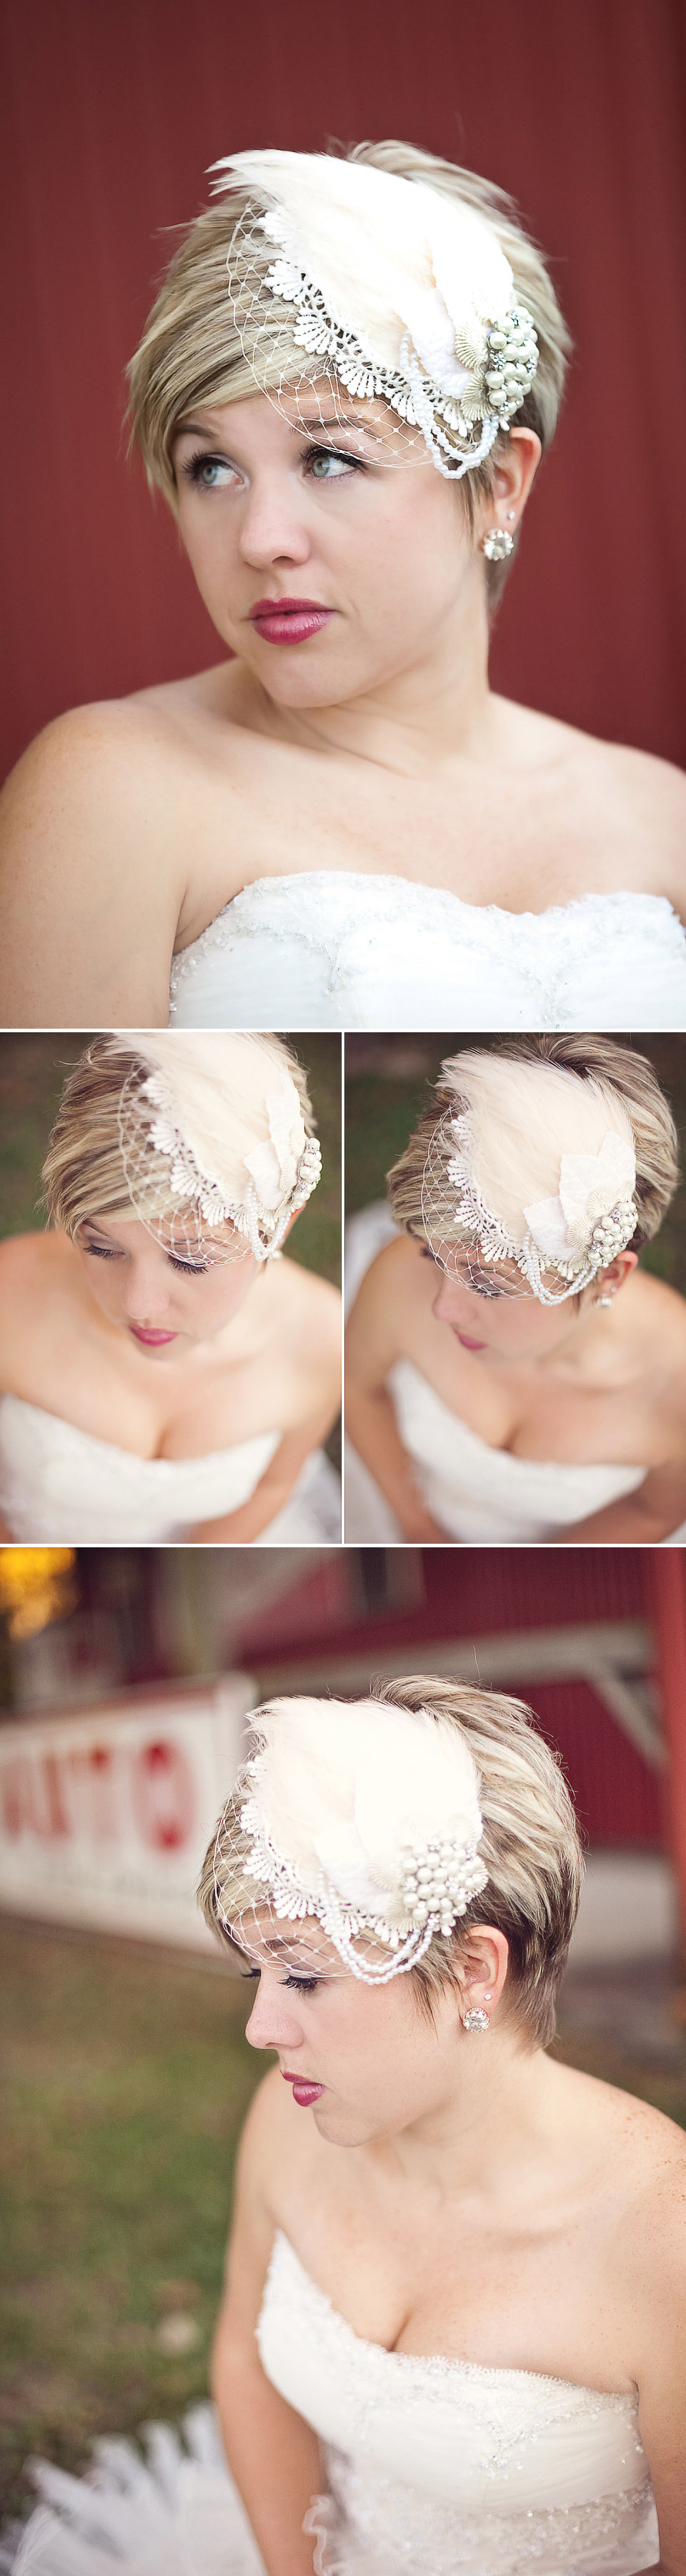 KC weddings, bride, vintage hair piece, Jana Marie Photography, Red lipstick